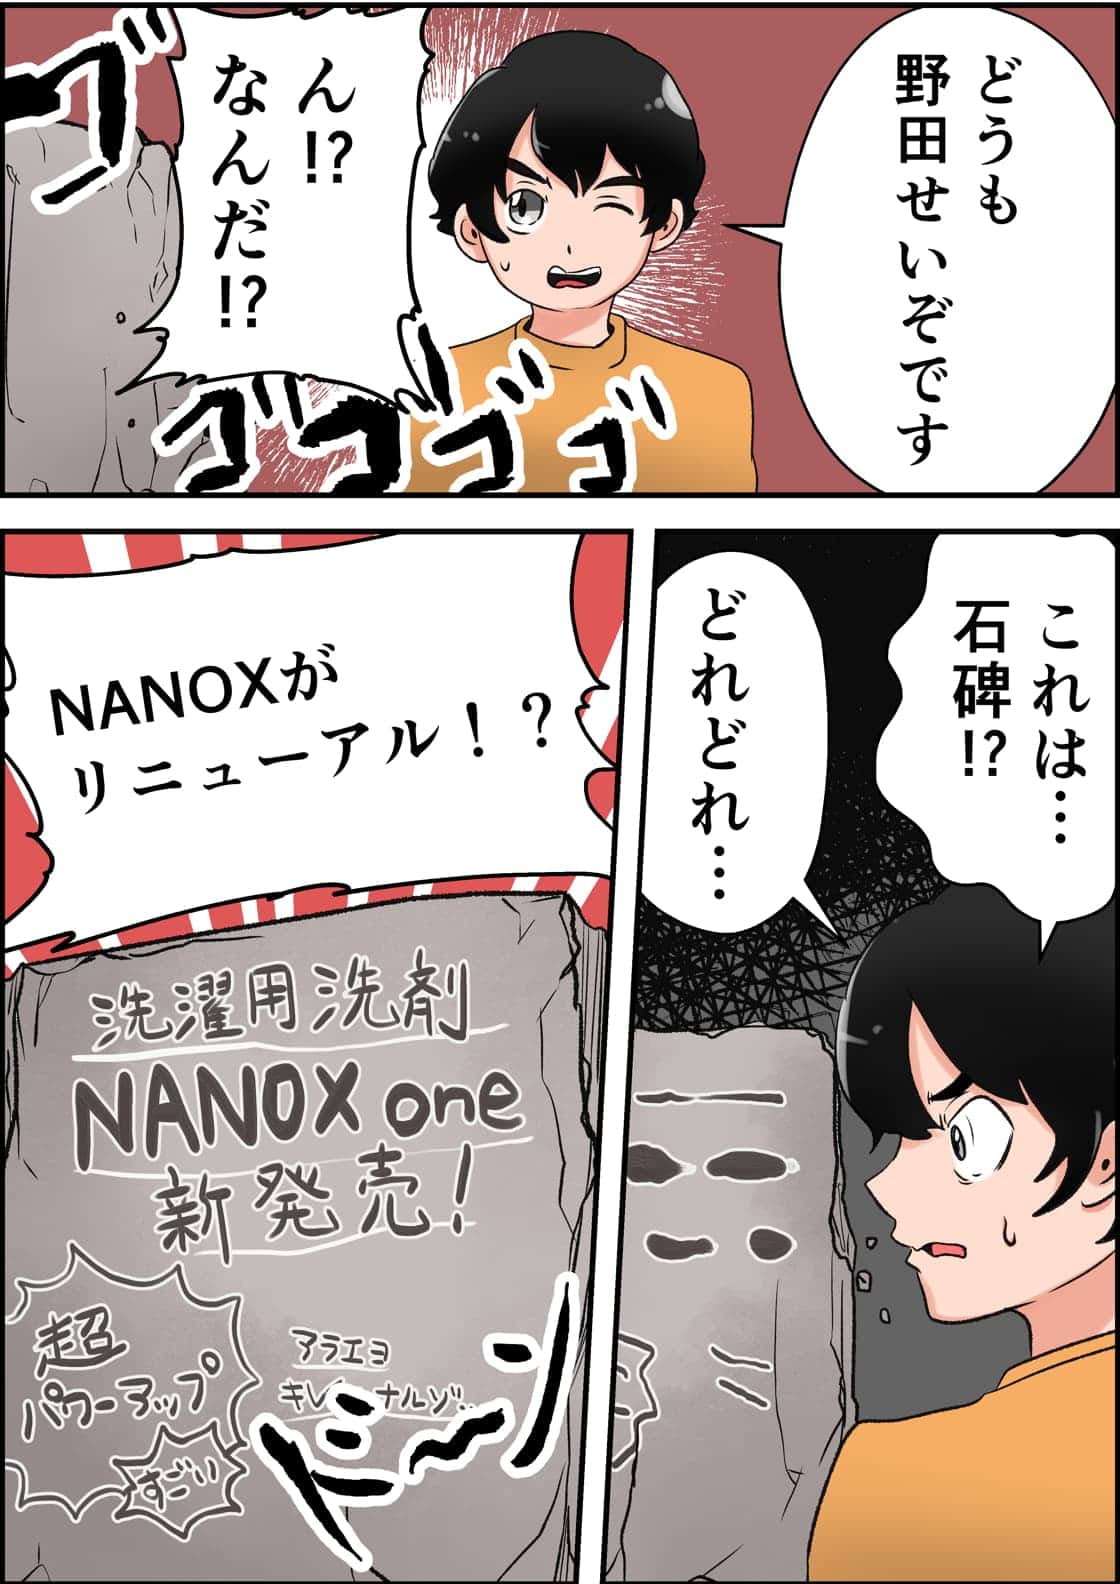 NANOXがリニューアルされることを知った野田せいぞさん（漫画）